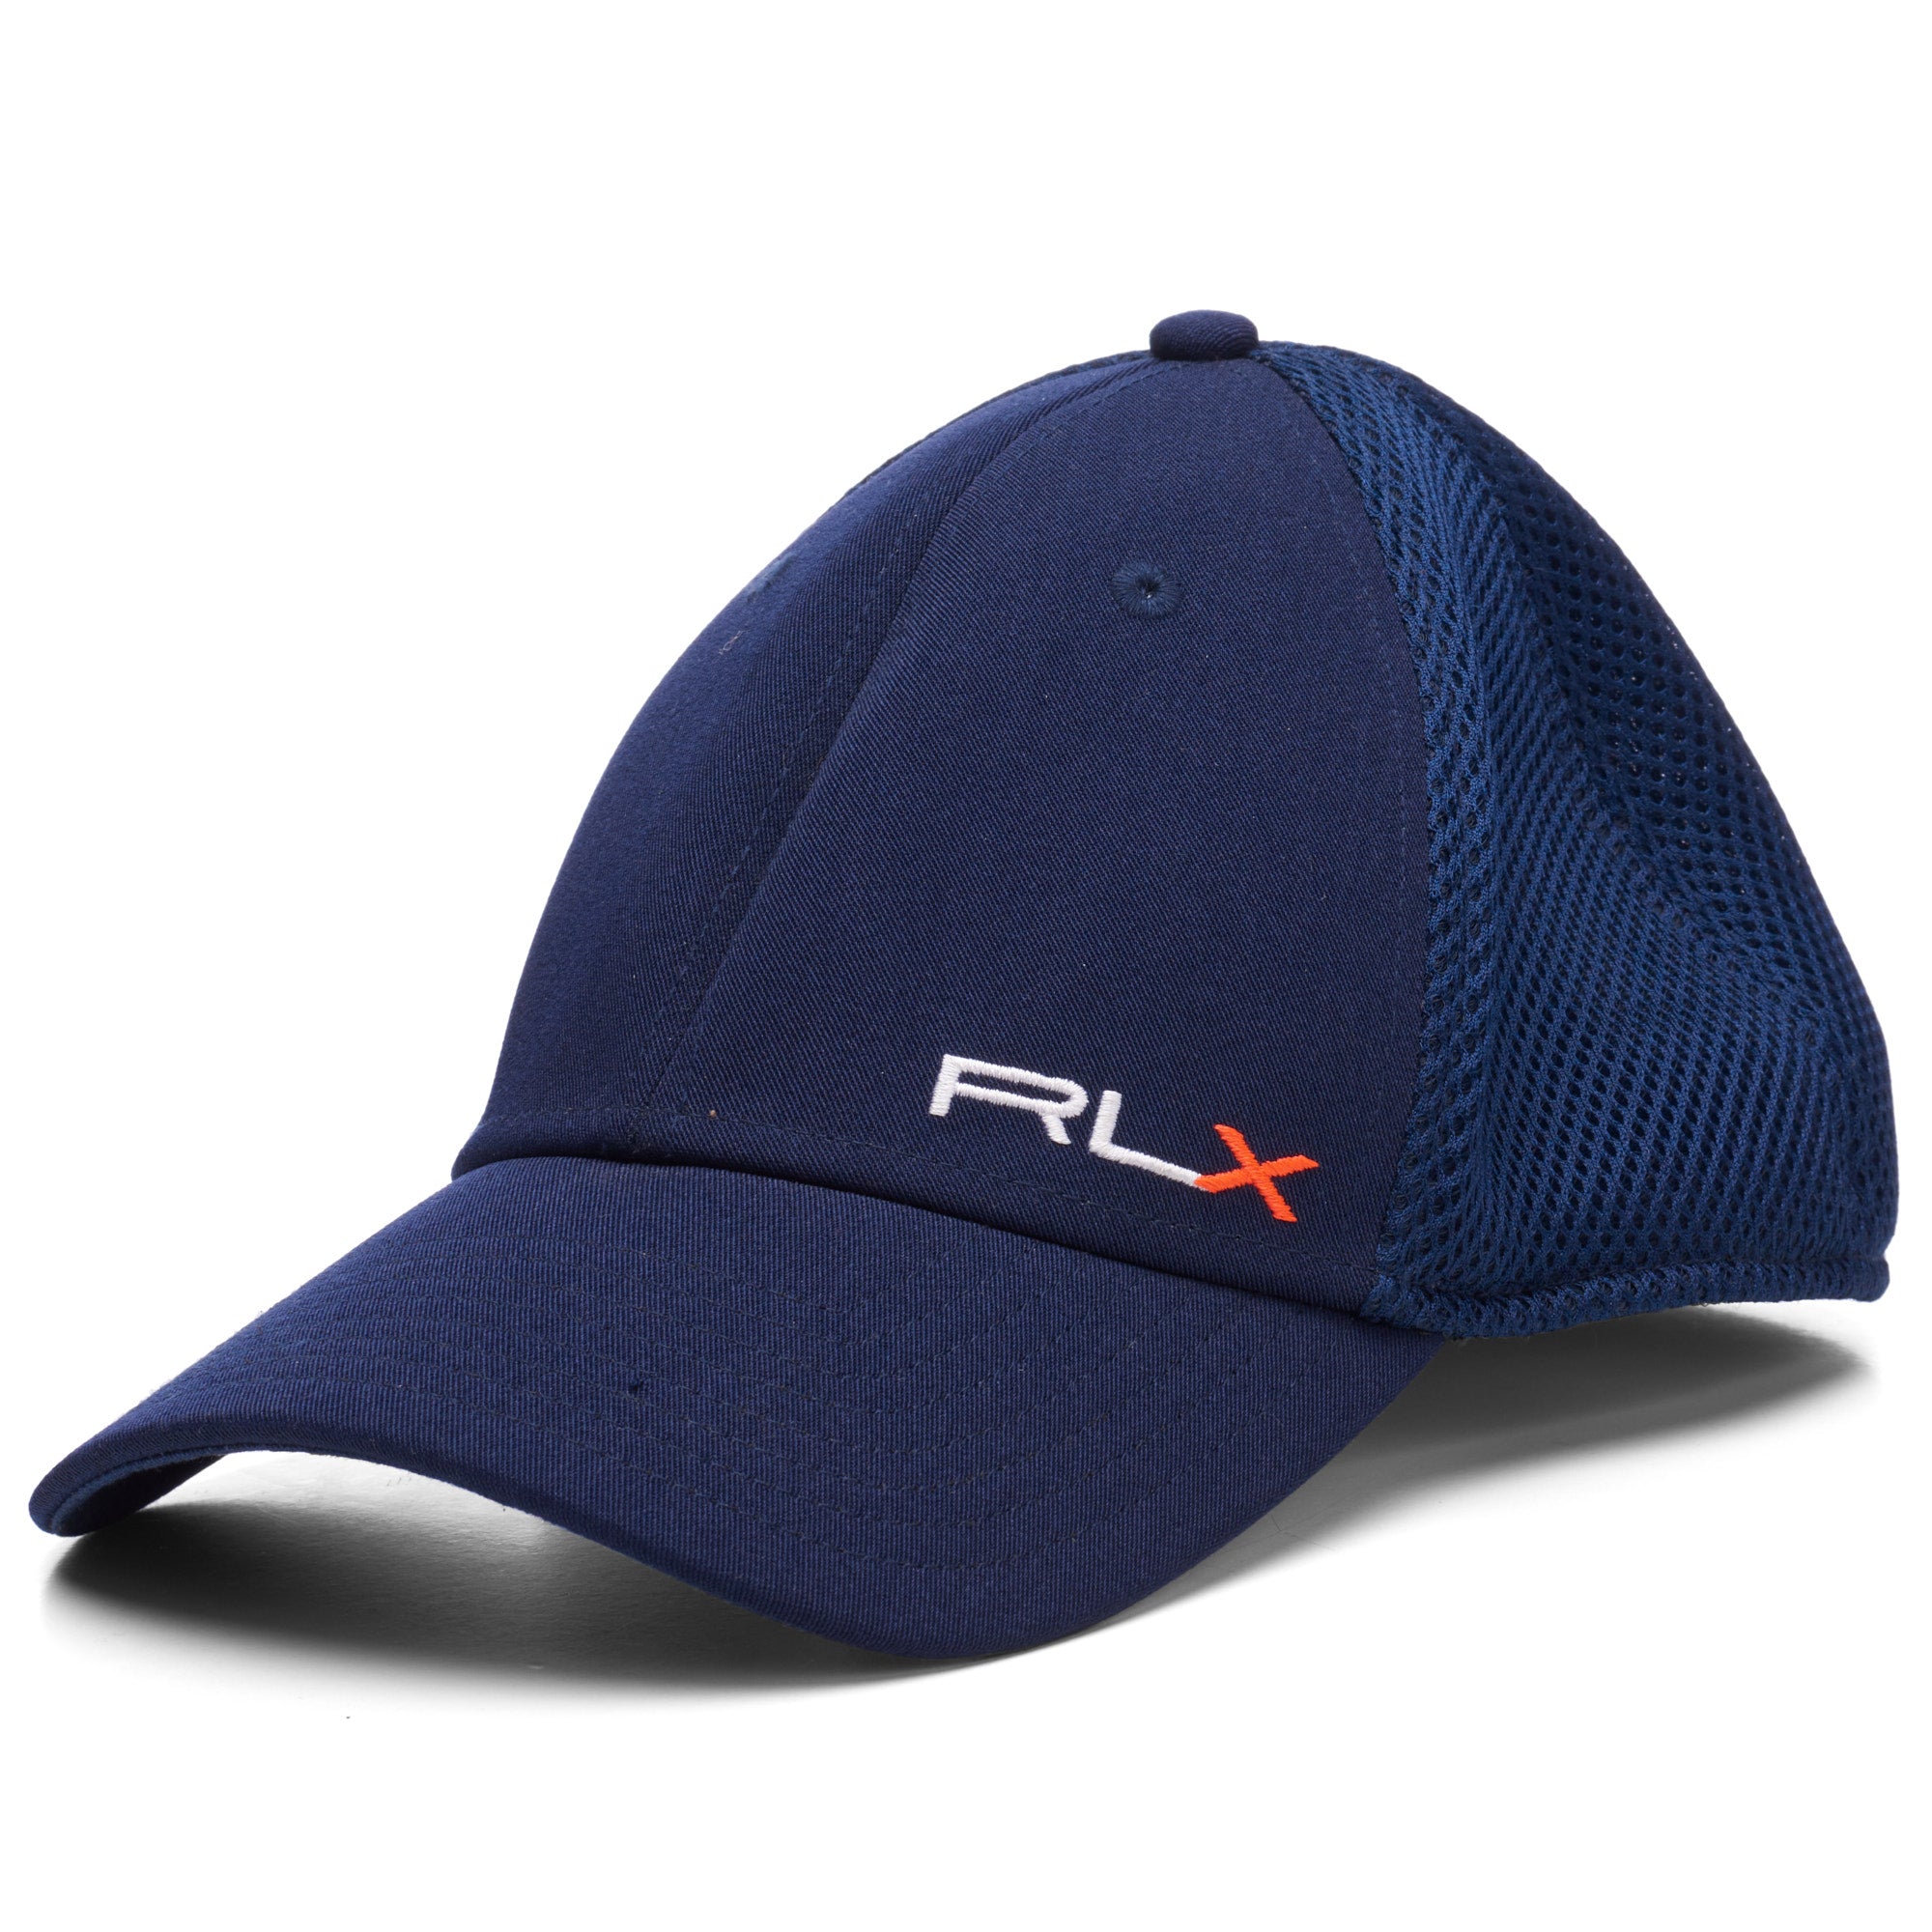 LAUREN RLX Twill Size Cotton S/M Fit Blue Flex Golf RALPH NEW Cap